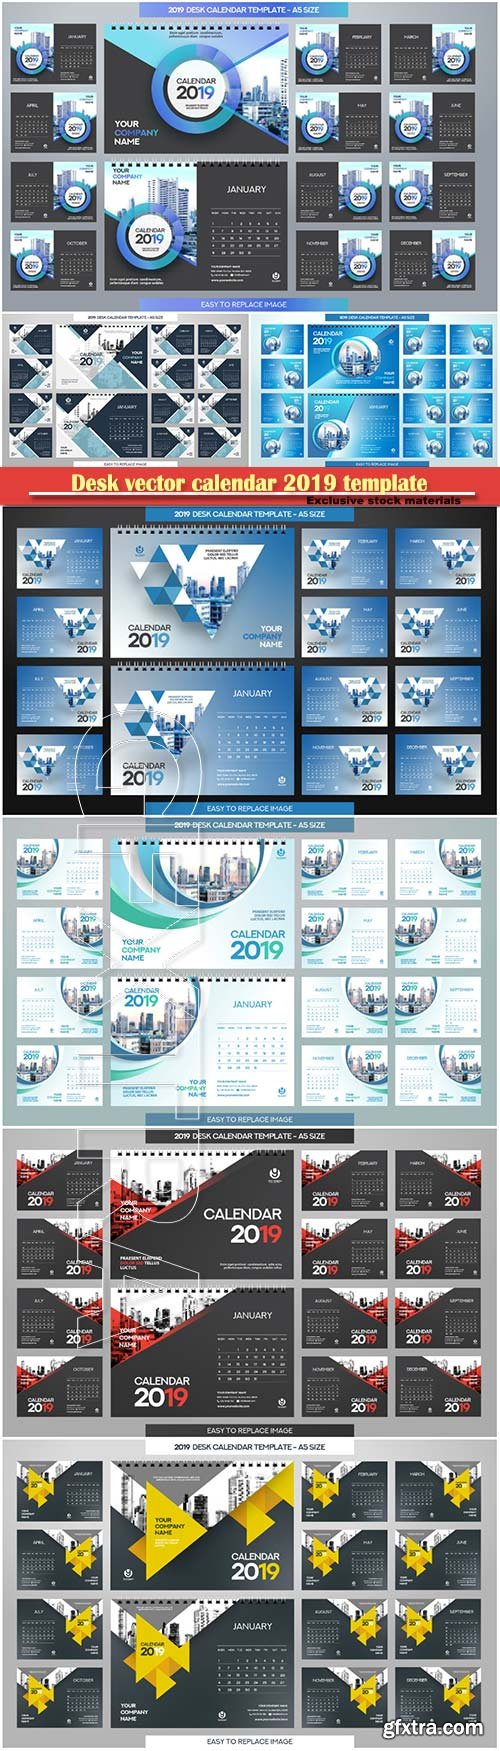 Desk vector calendar 2019 template, 12 months included